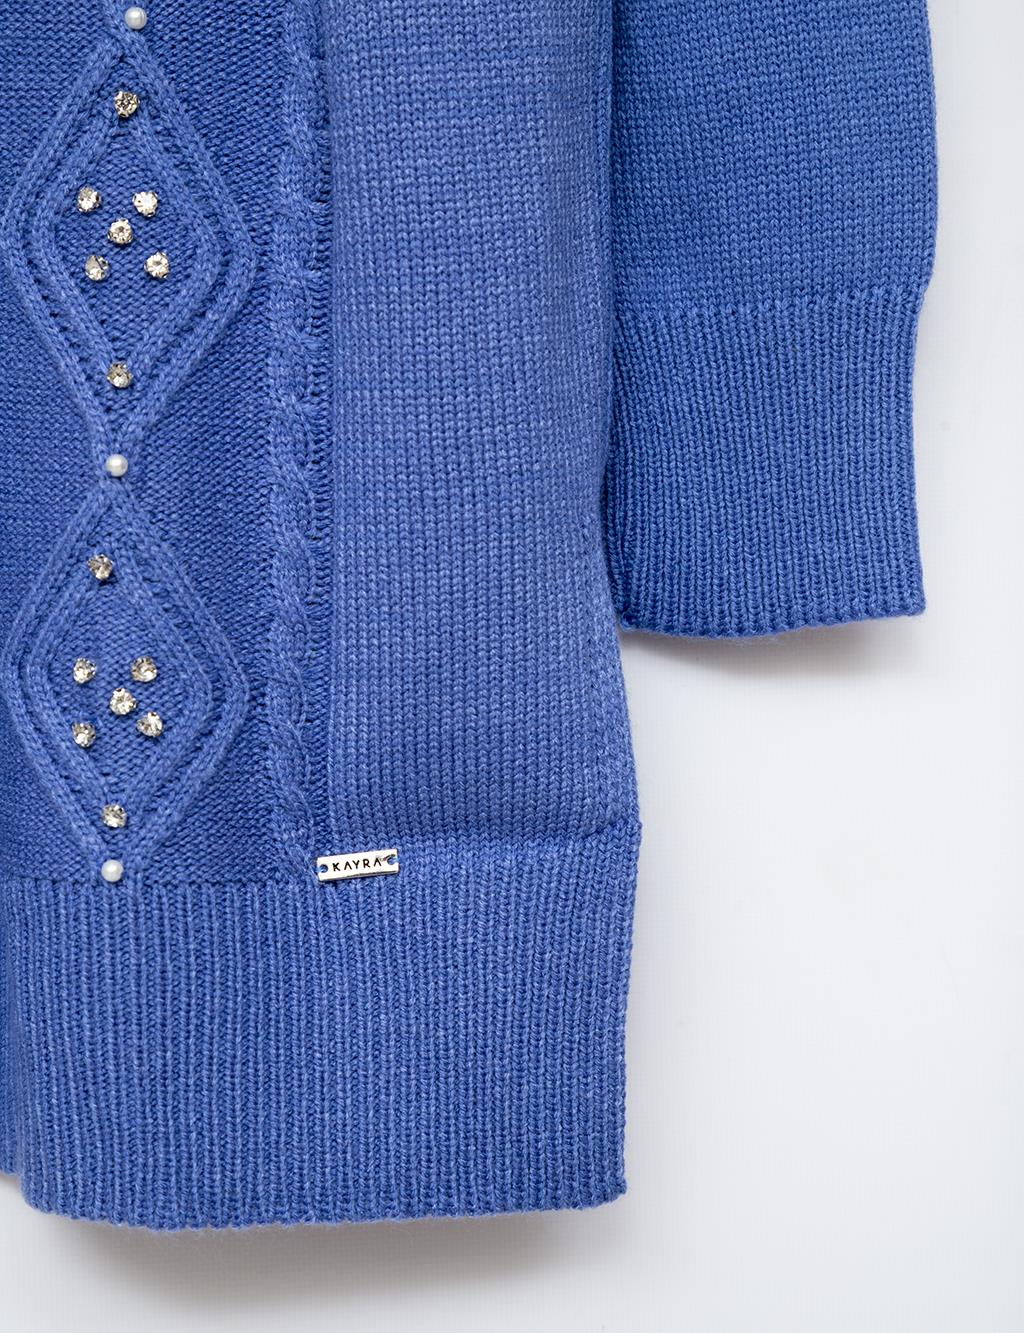 Hair Braid Pattern Knit Tunic Light Blue